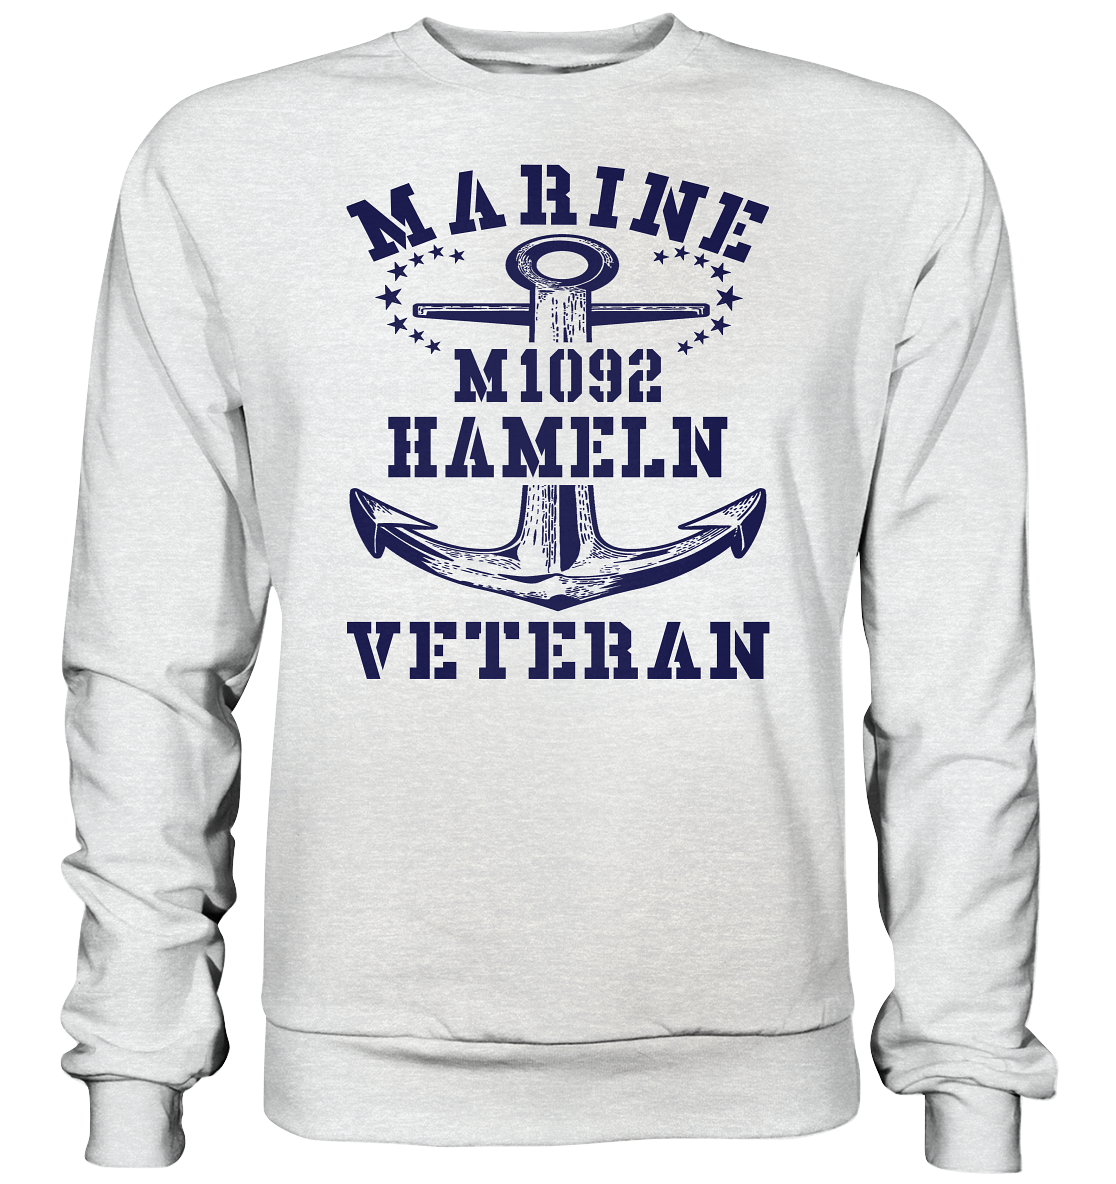 M1092 HAMELN Marine Veteran - Premium Sweatshirt